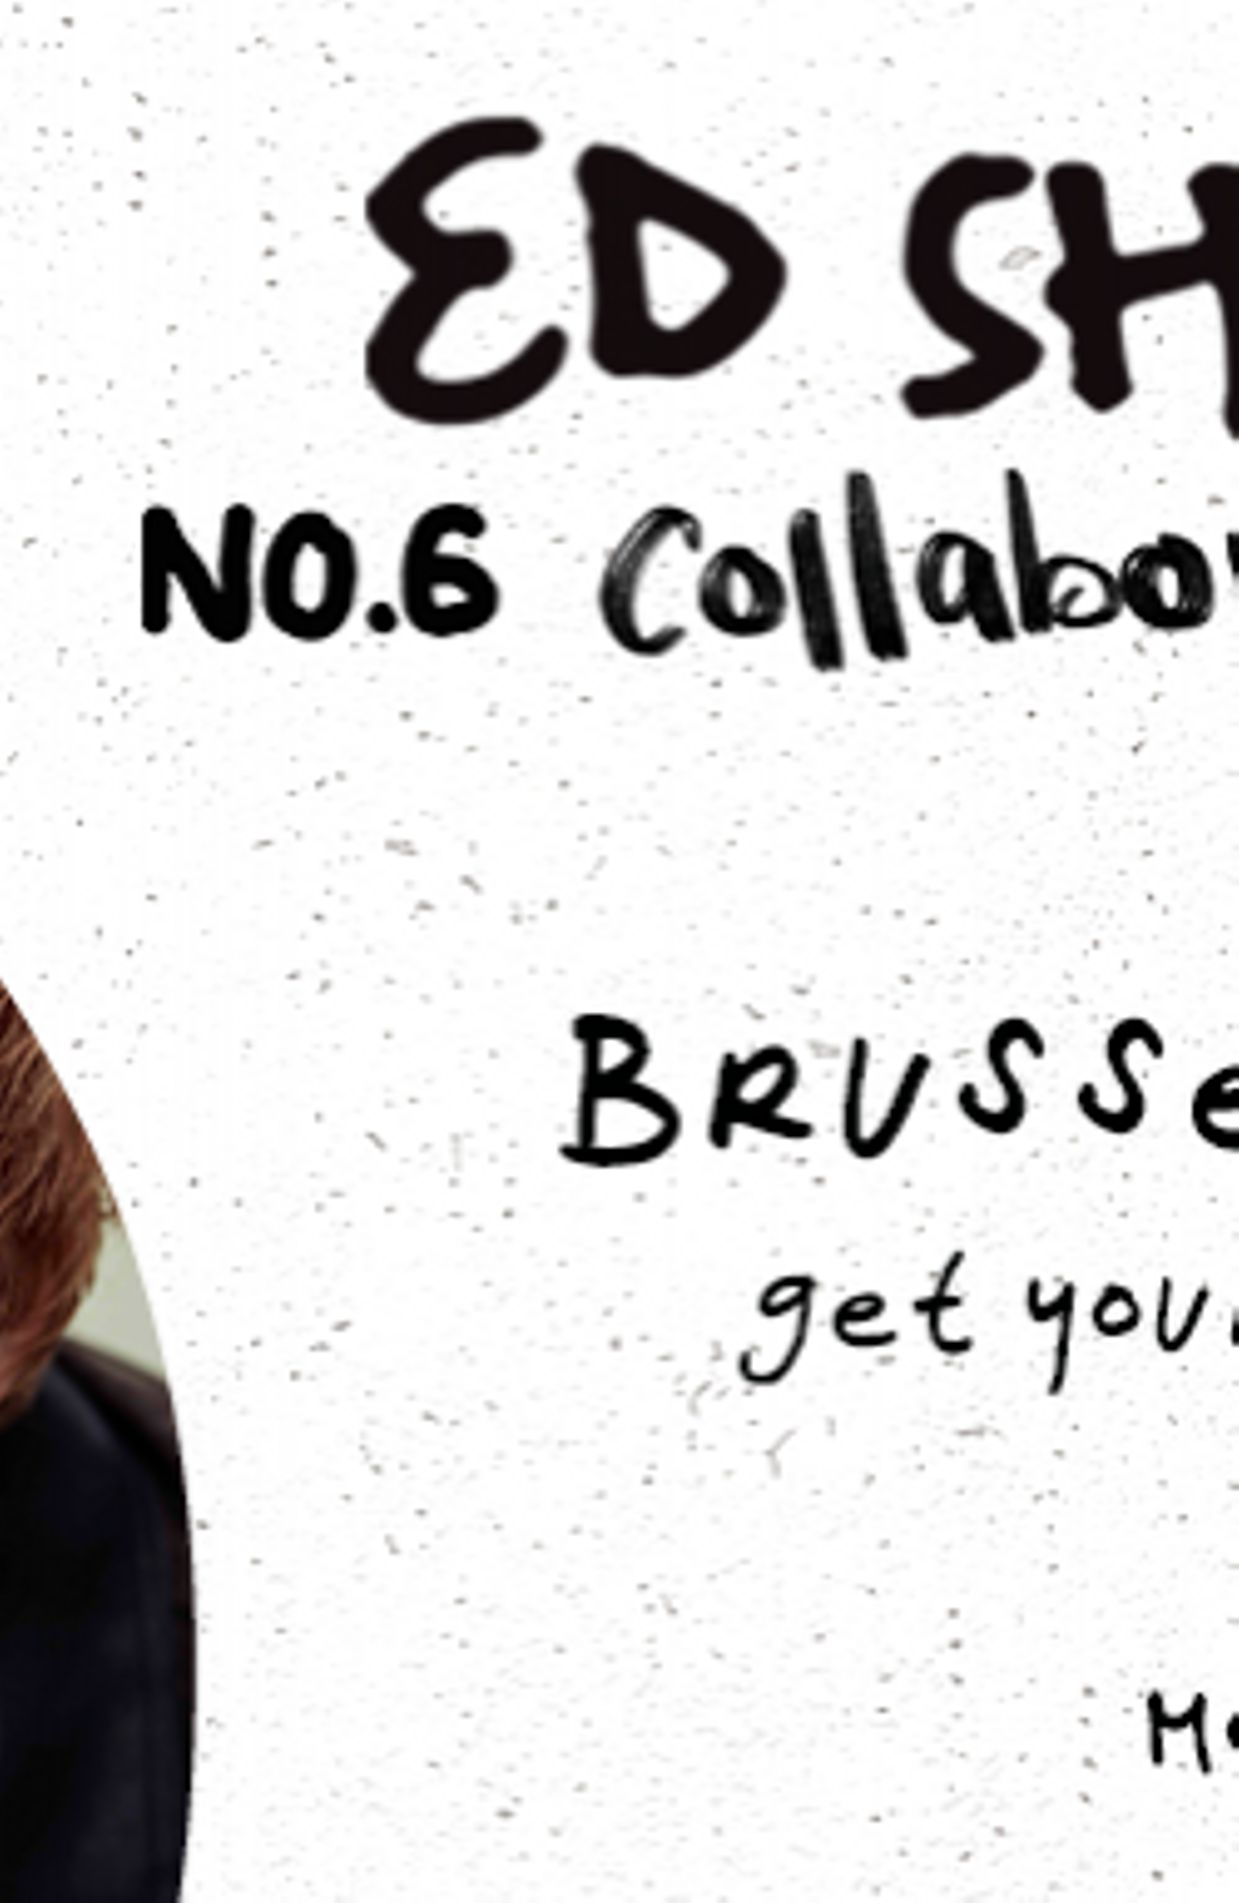 LA sortie événement de juillet? "Collaborations n°6" d'Ed Sheeran! 